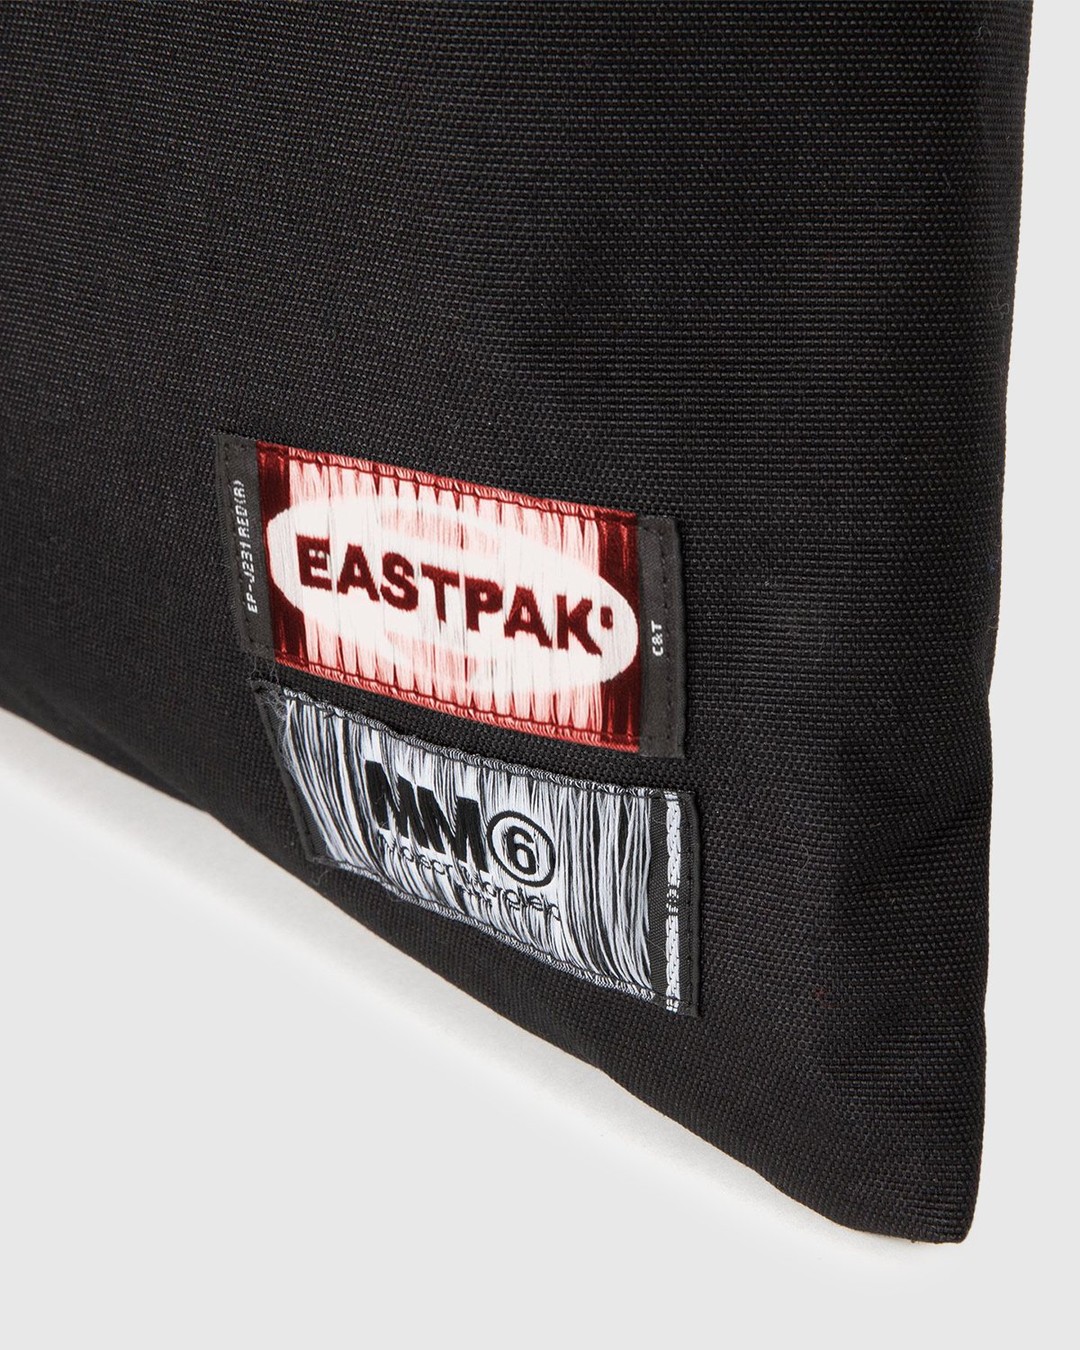 MM6 Maison Margiela x Eastpak – Shopping Bag Black - Tote Bags - Black - Image 2